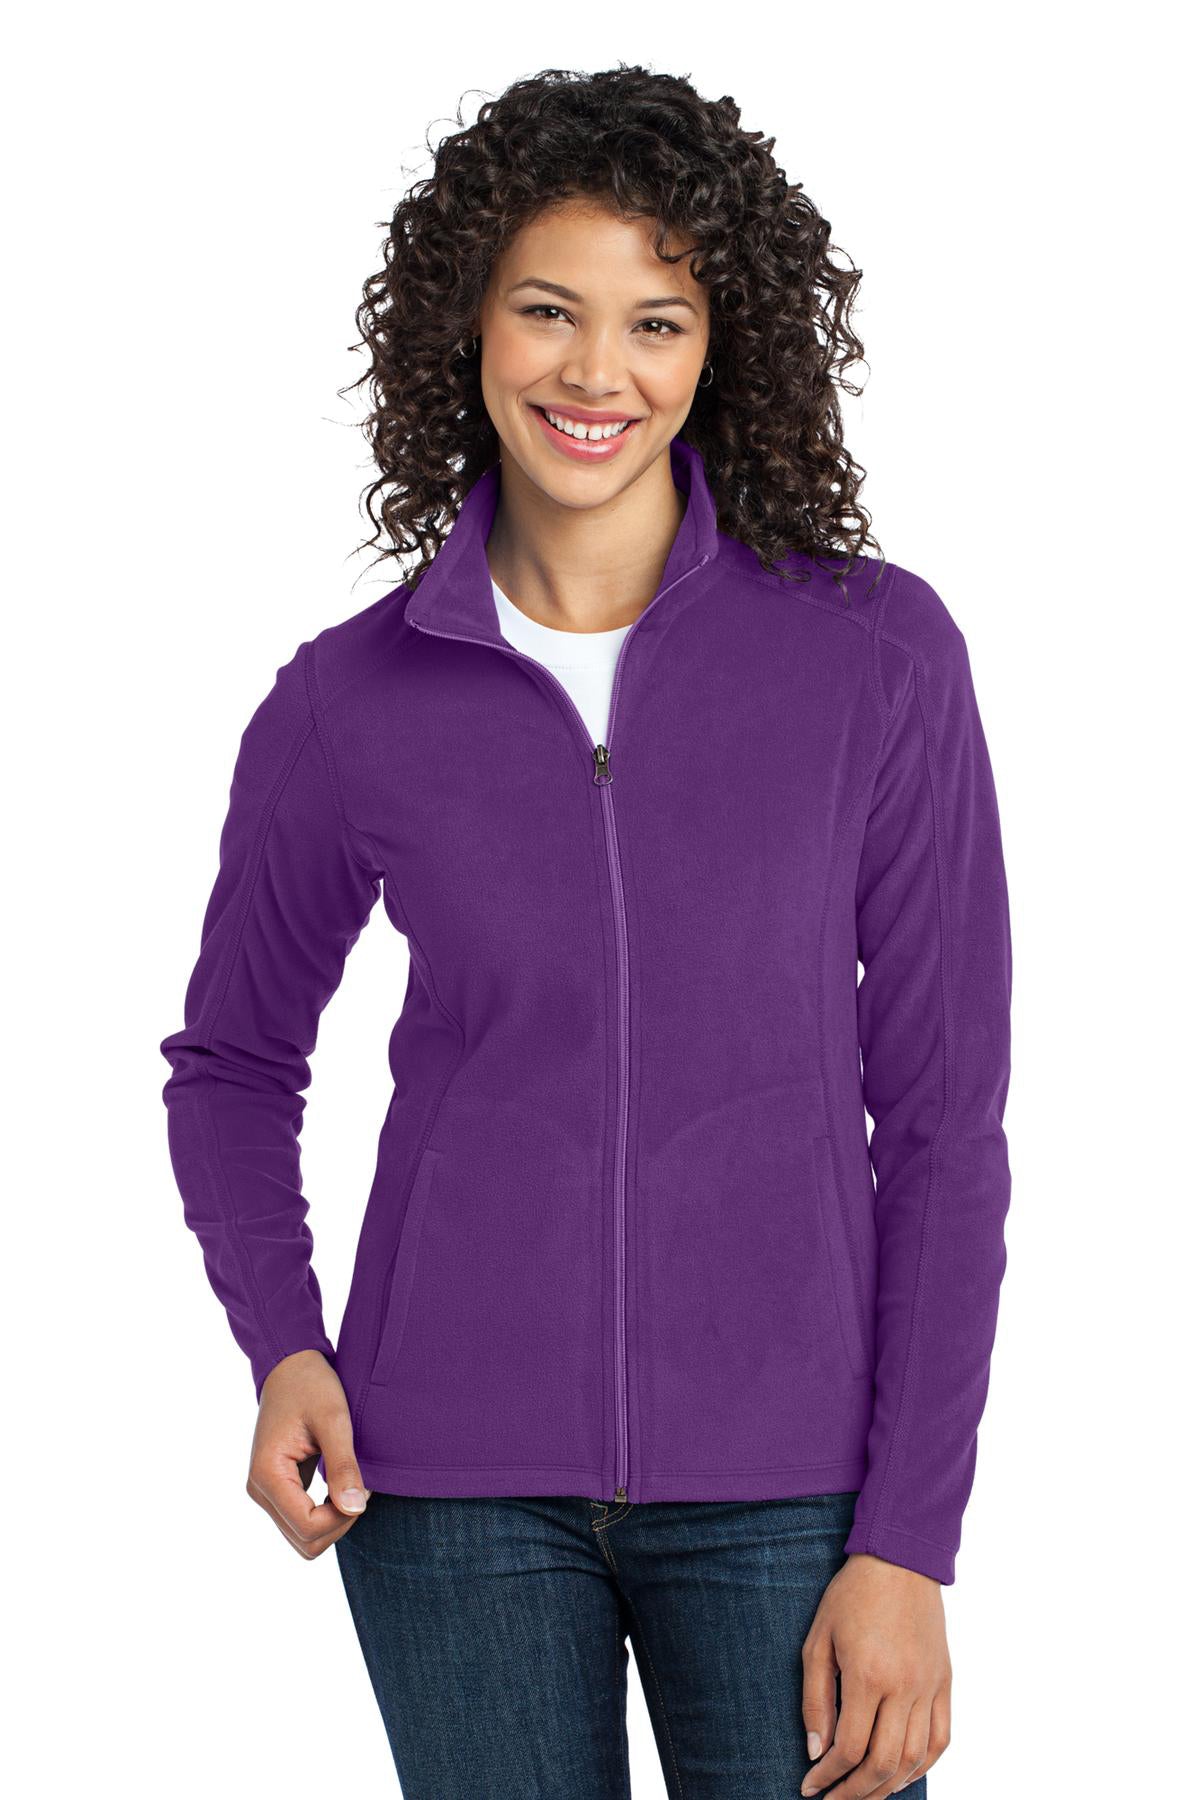 Port Authority L223 Women's Microfleece Zip Jacket Amenthyst Purple